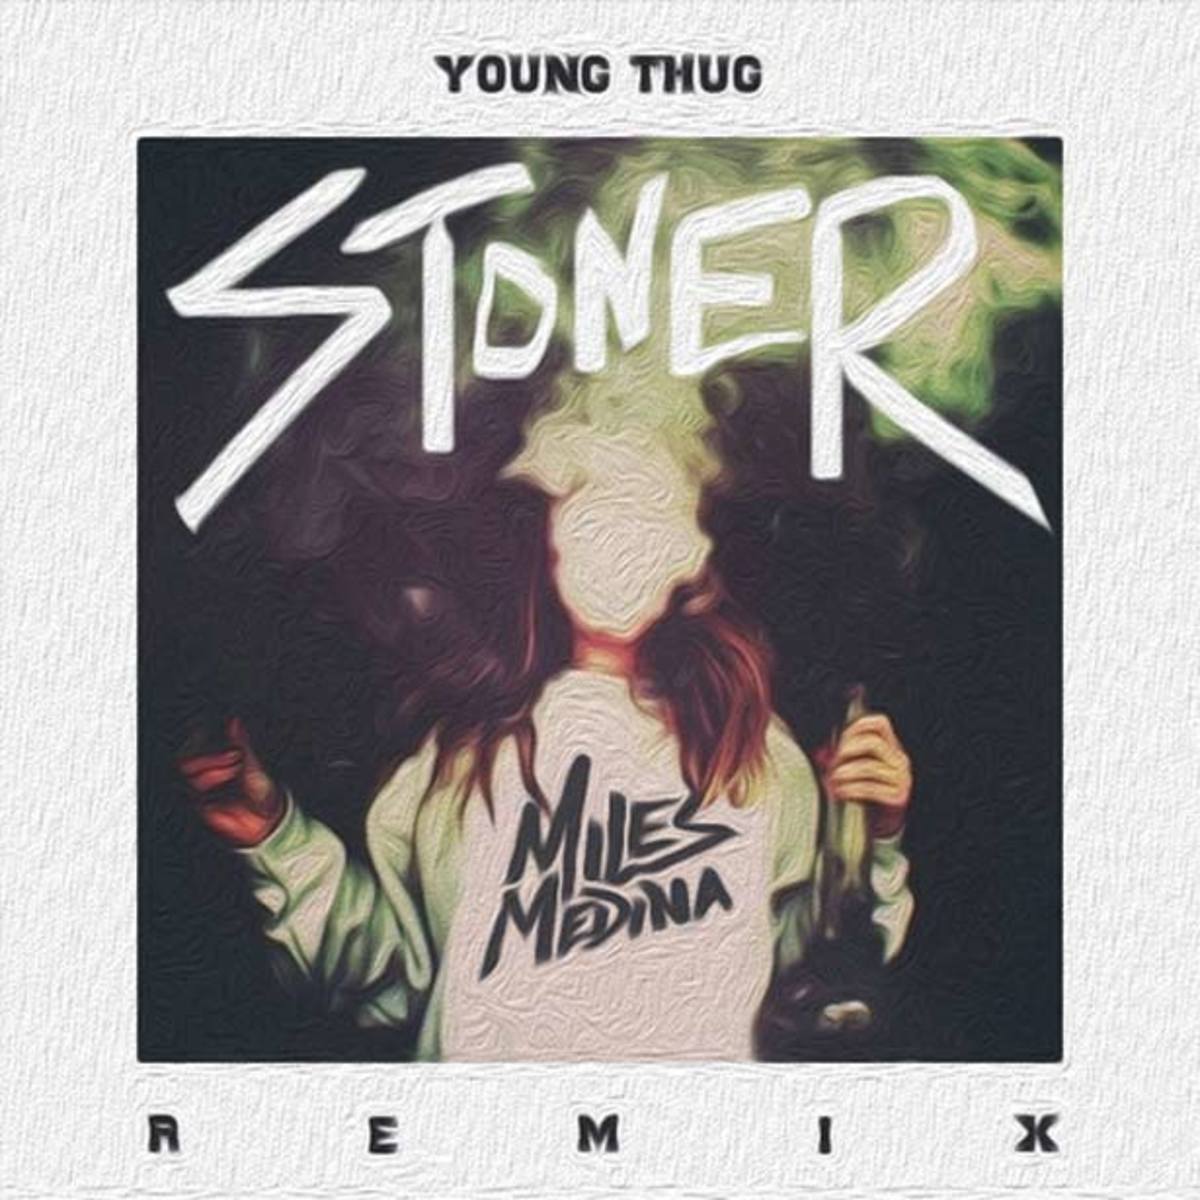 Premiere: Young Thug "Stoner" (Miles Medina Remix) - EDM Download